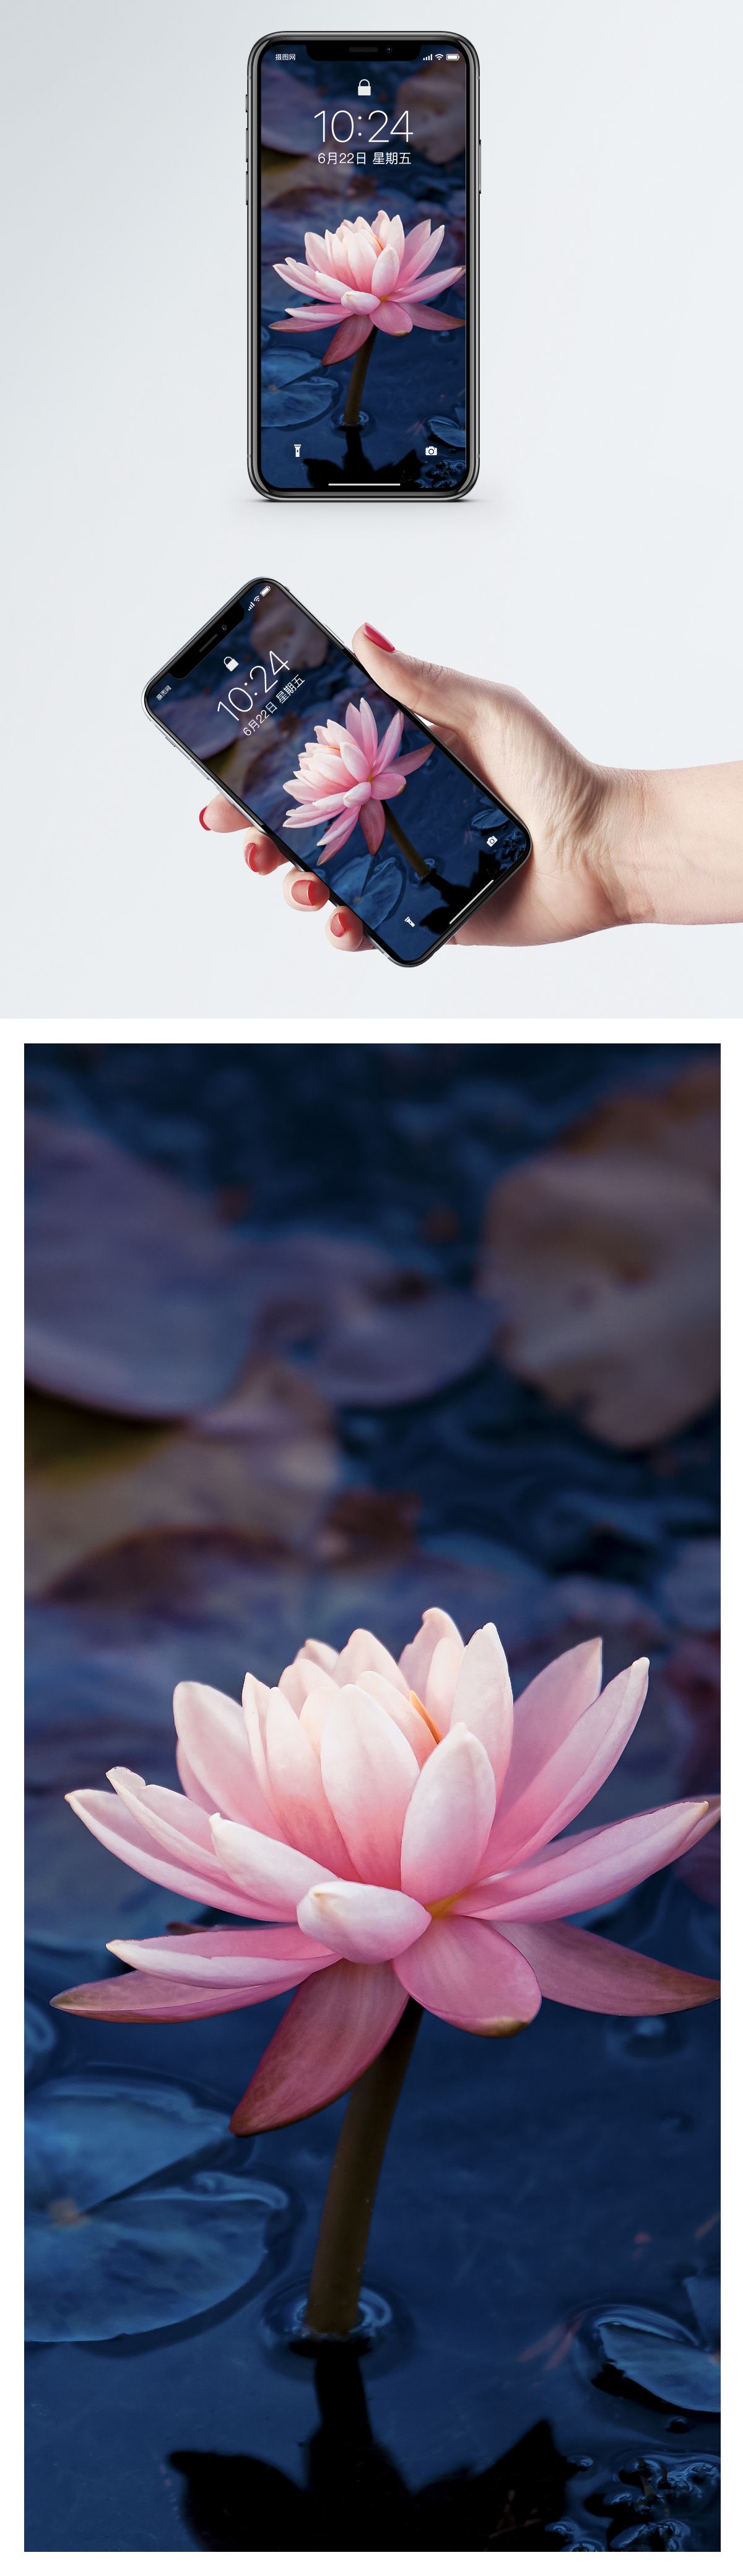 Water Lily Phone Screensaver - HD Wallpaper 